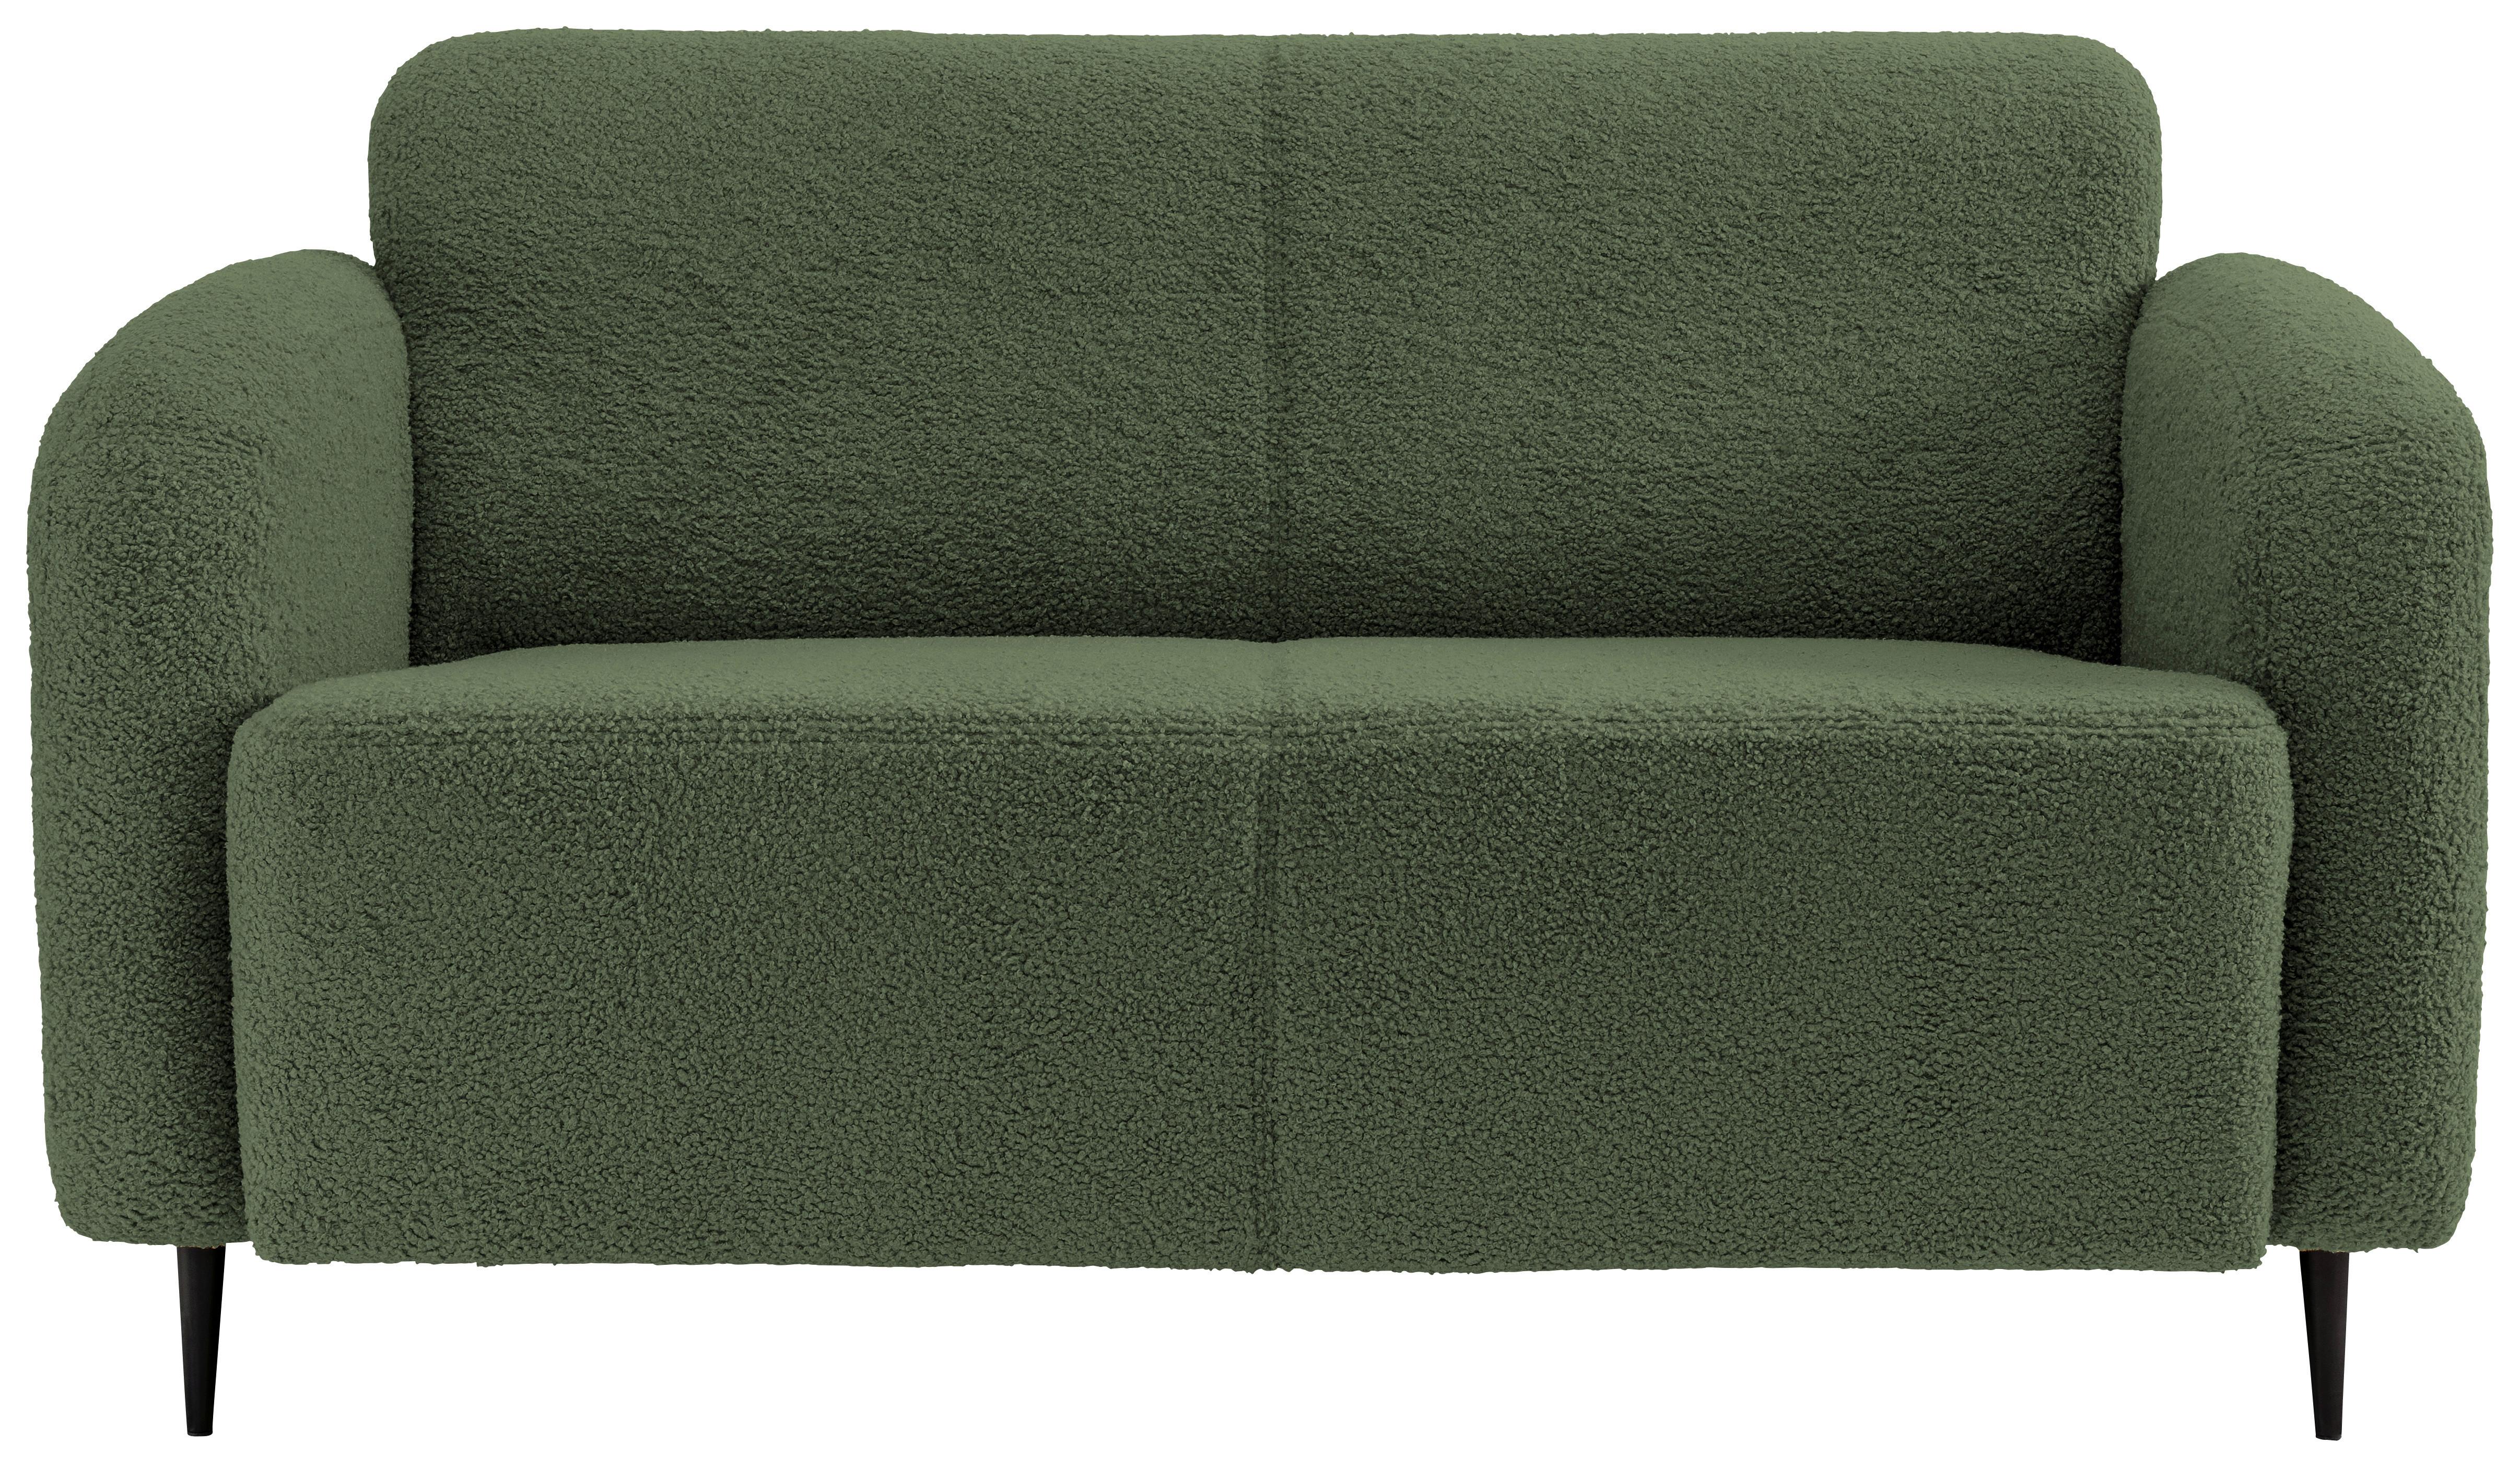 2-Sitzer-Sofa Marone Dunkelgrün Teddystoff - Dunkelgrün/Schwarz, MODERN, Textil/Metall (140/76/90cm) - Livetastic